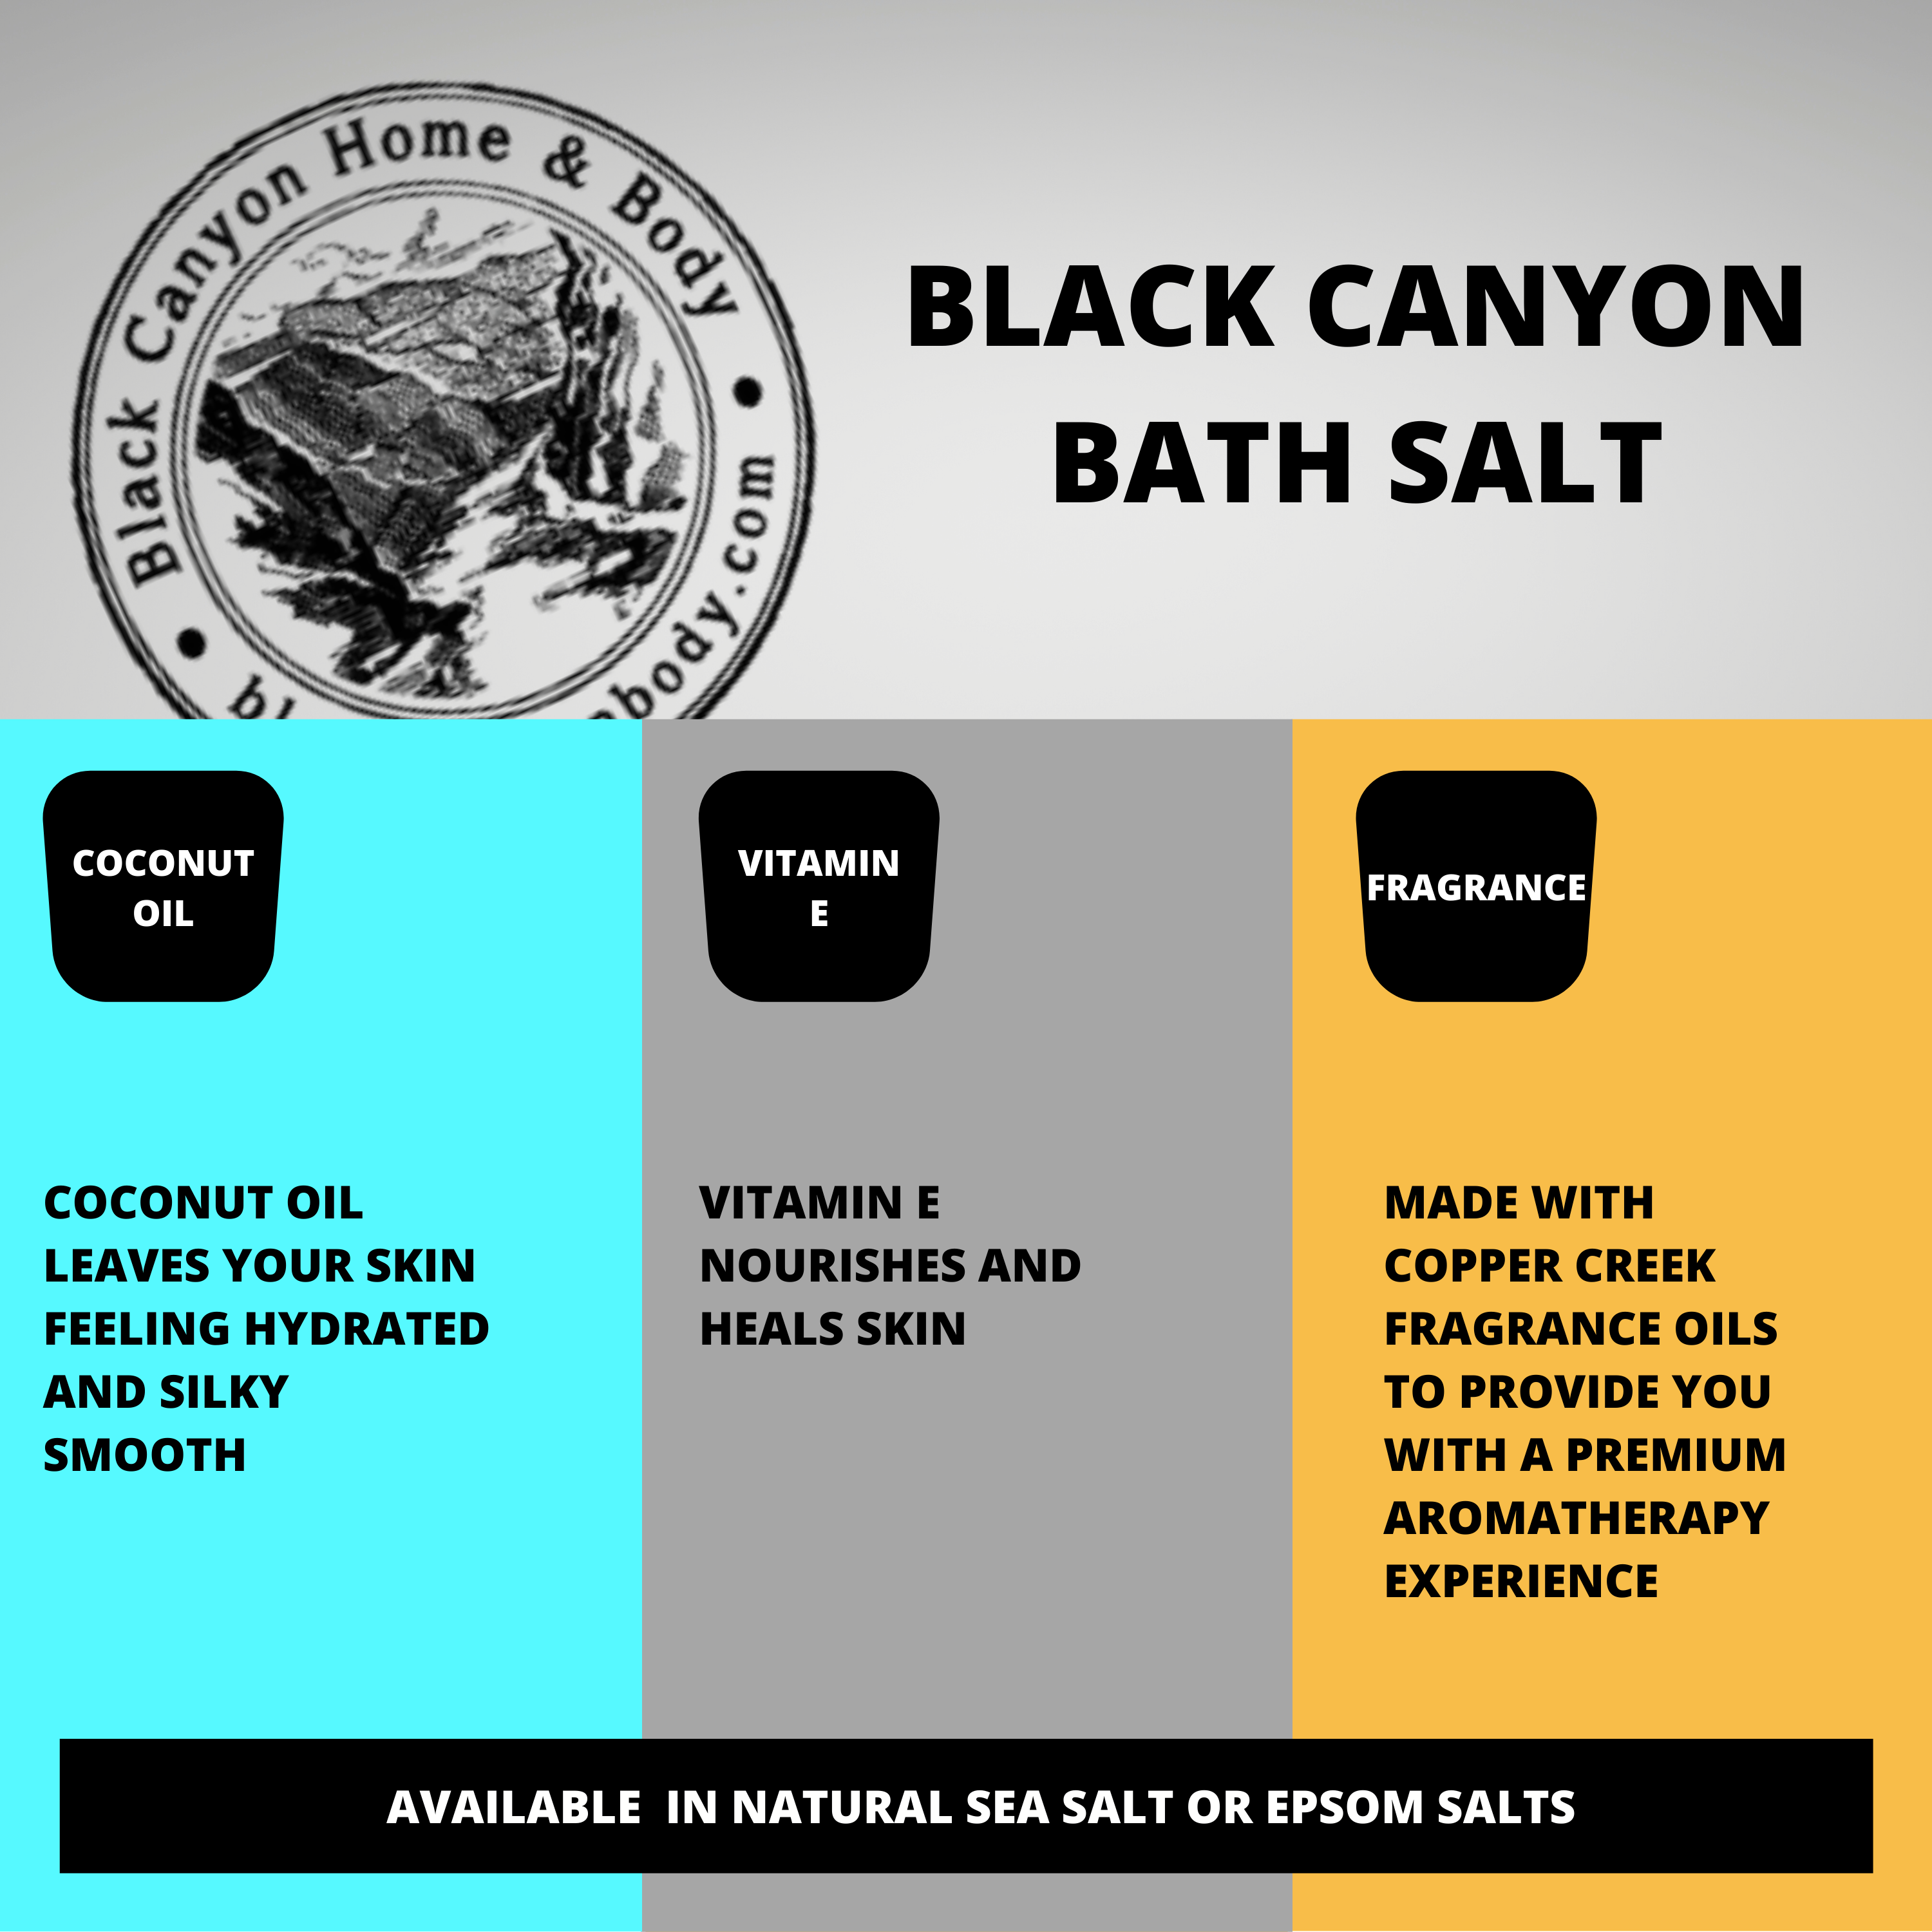 Black Canyon Easter Jelly Bean Scented Sea Salt Bath Soak